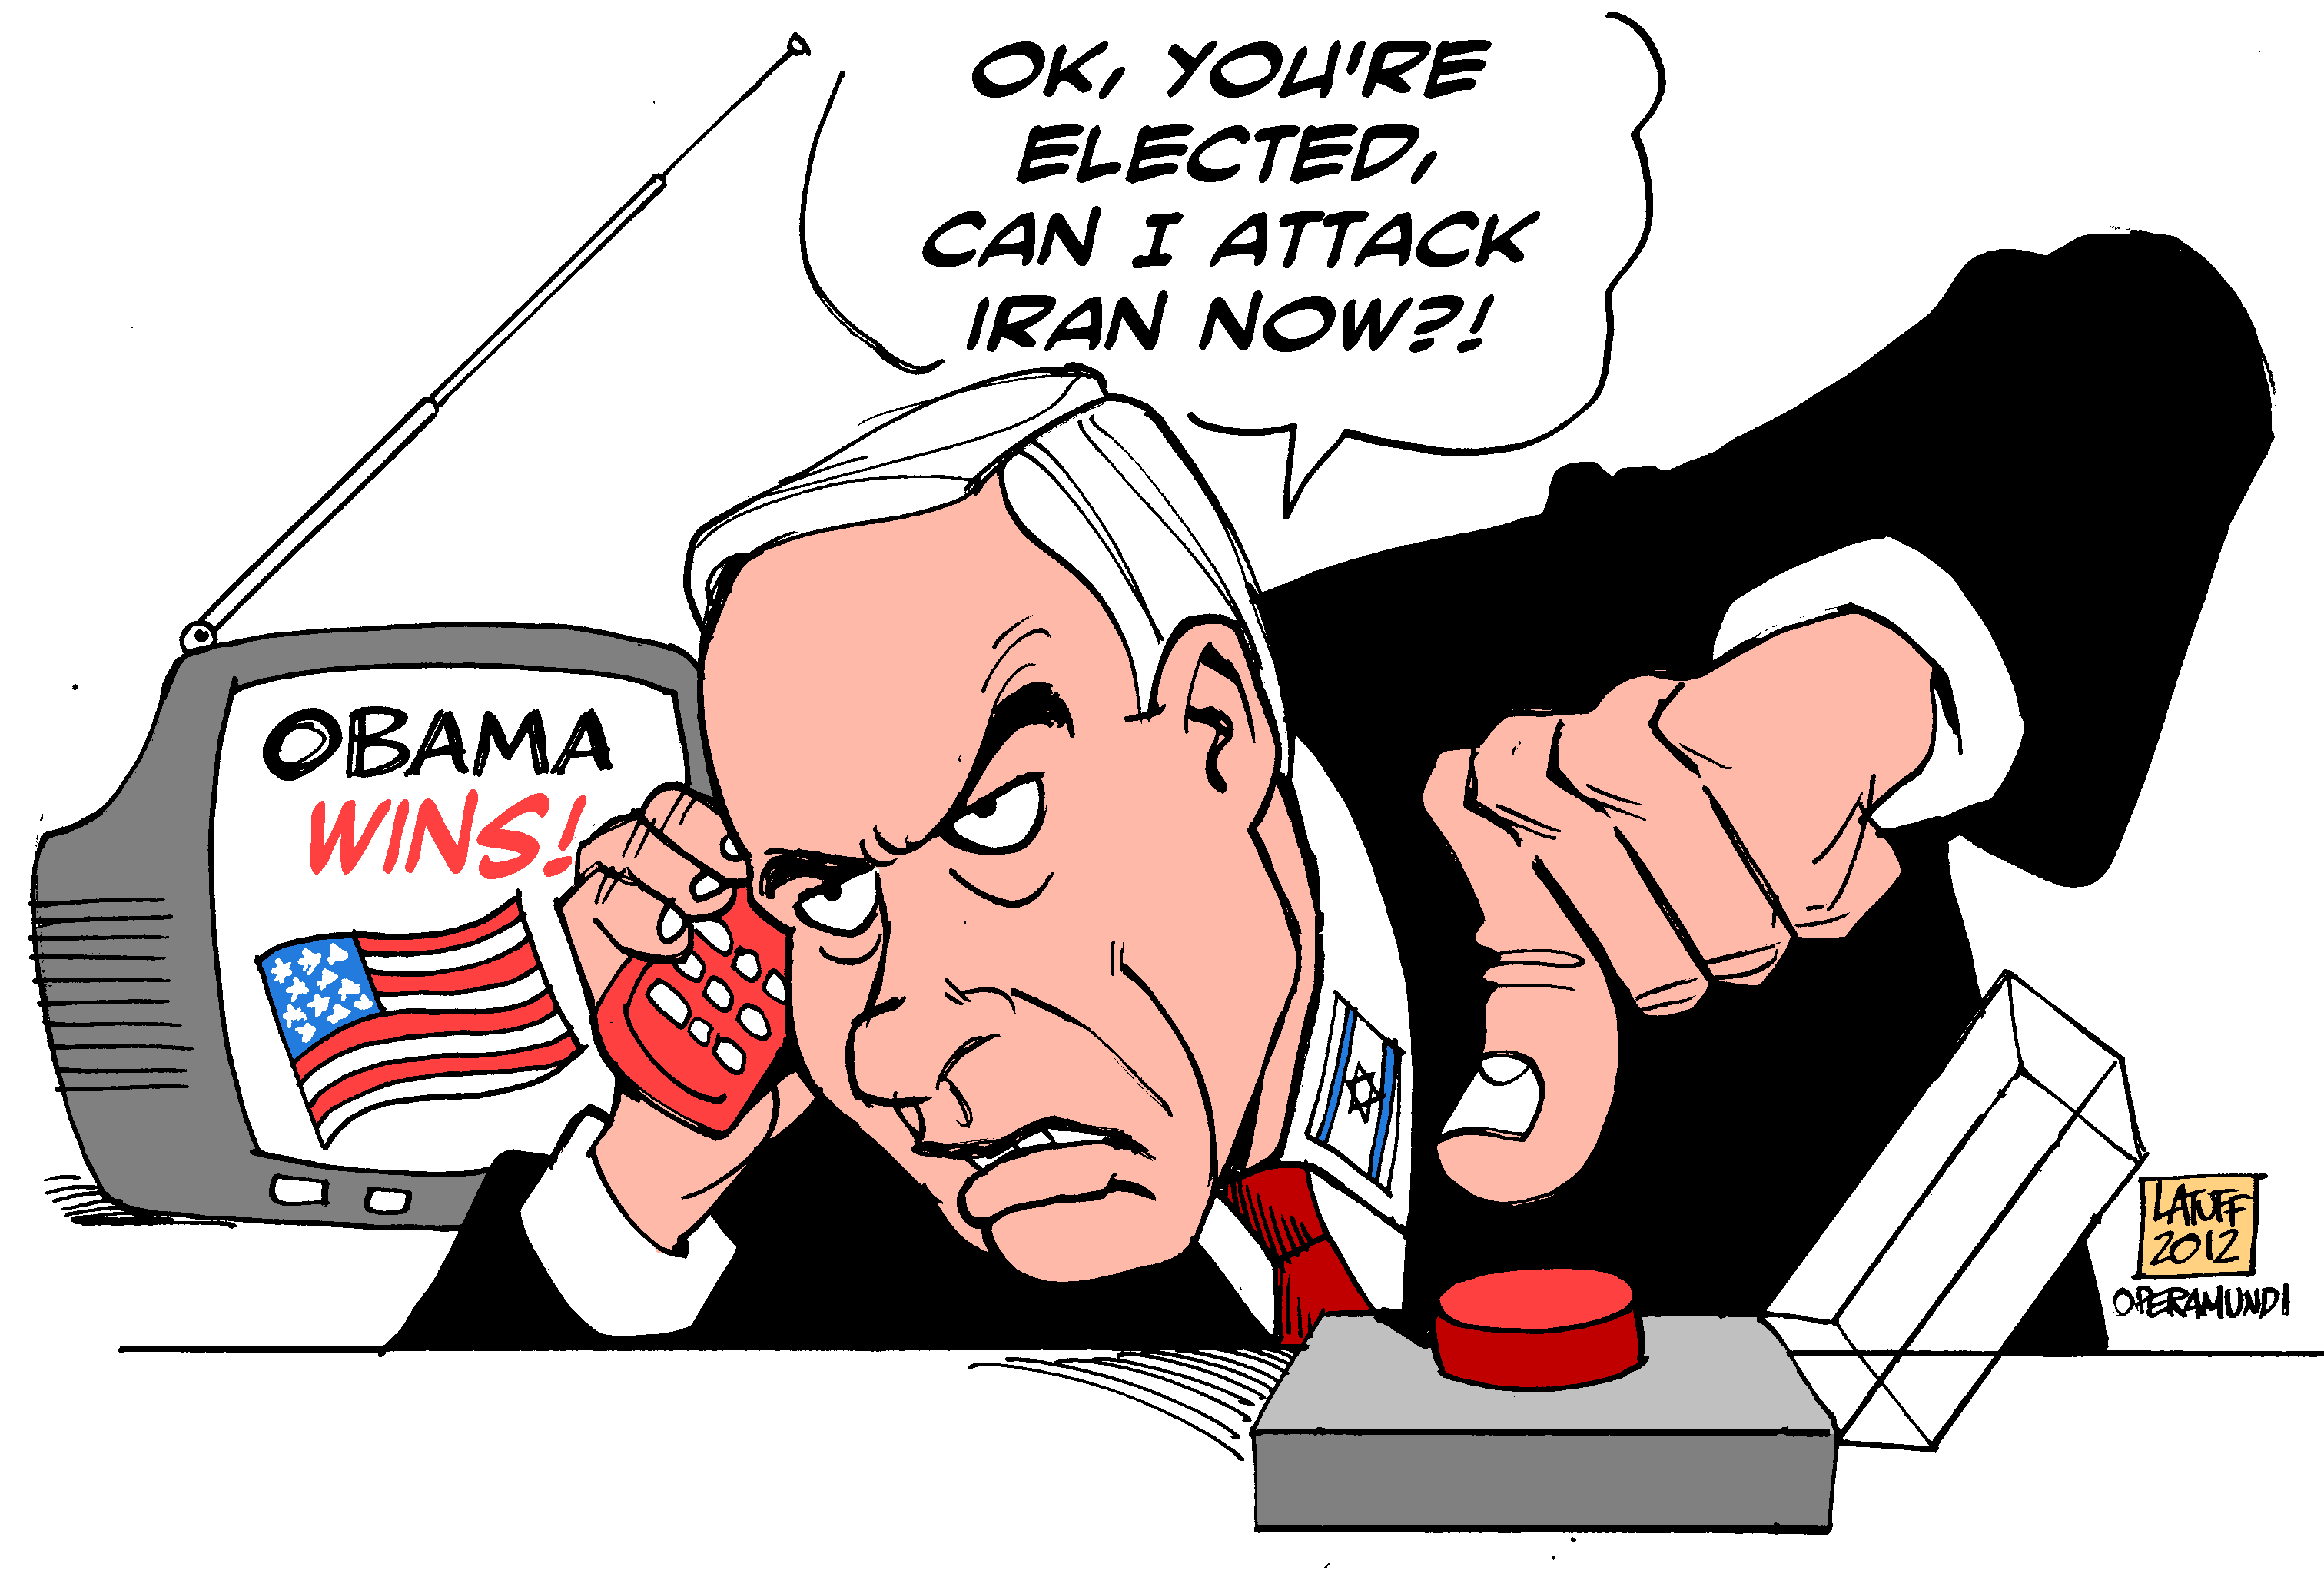 Iran Iarael2